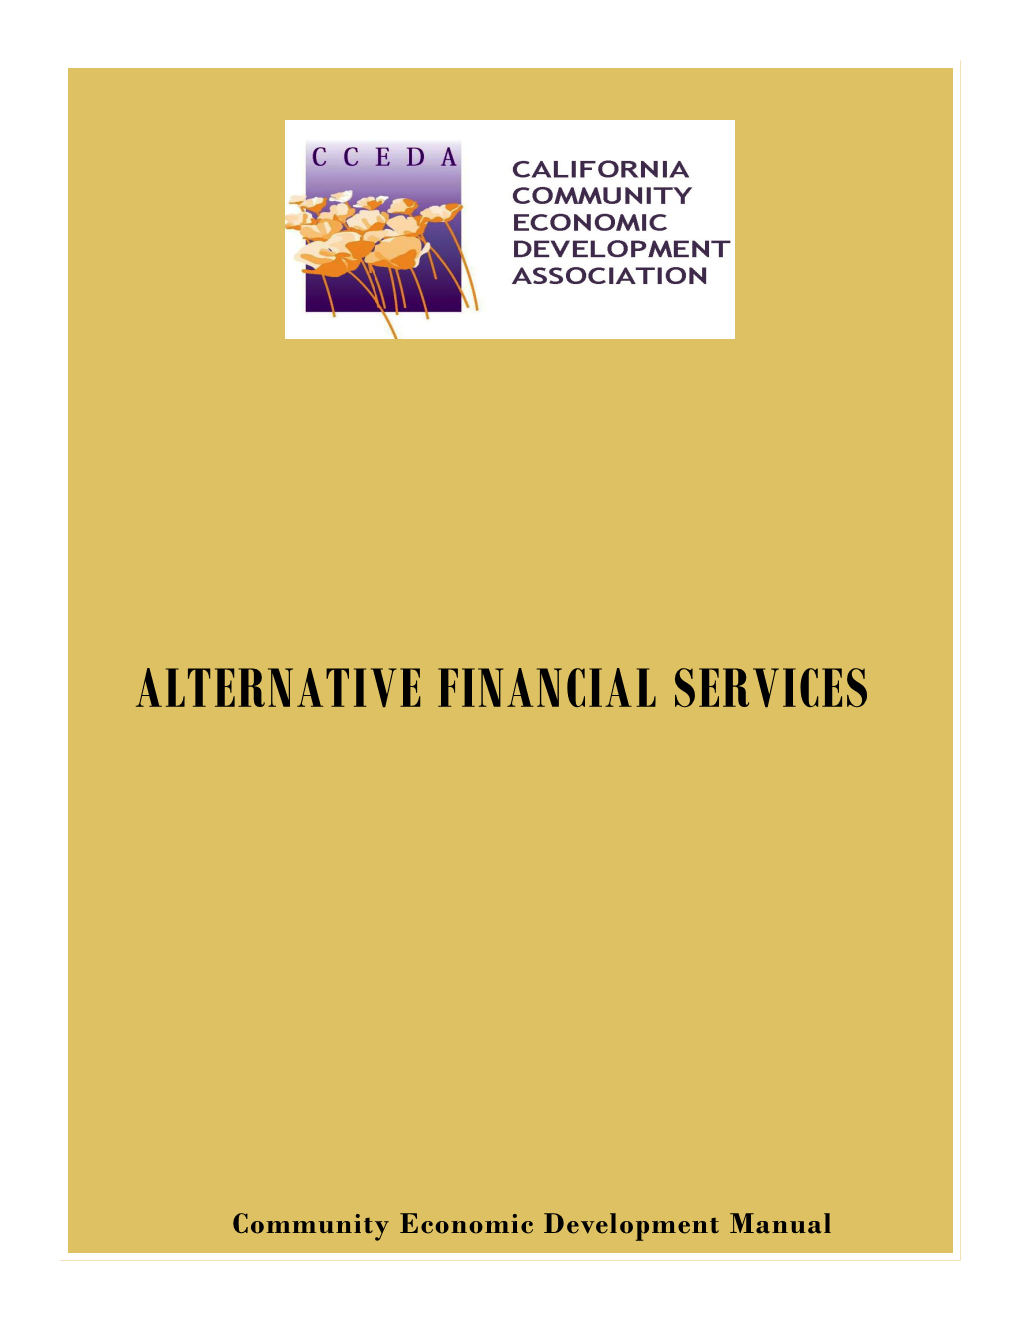 Alternative Financial Services